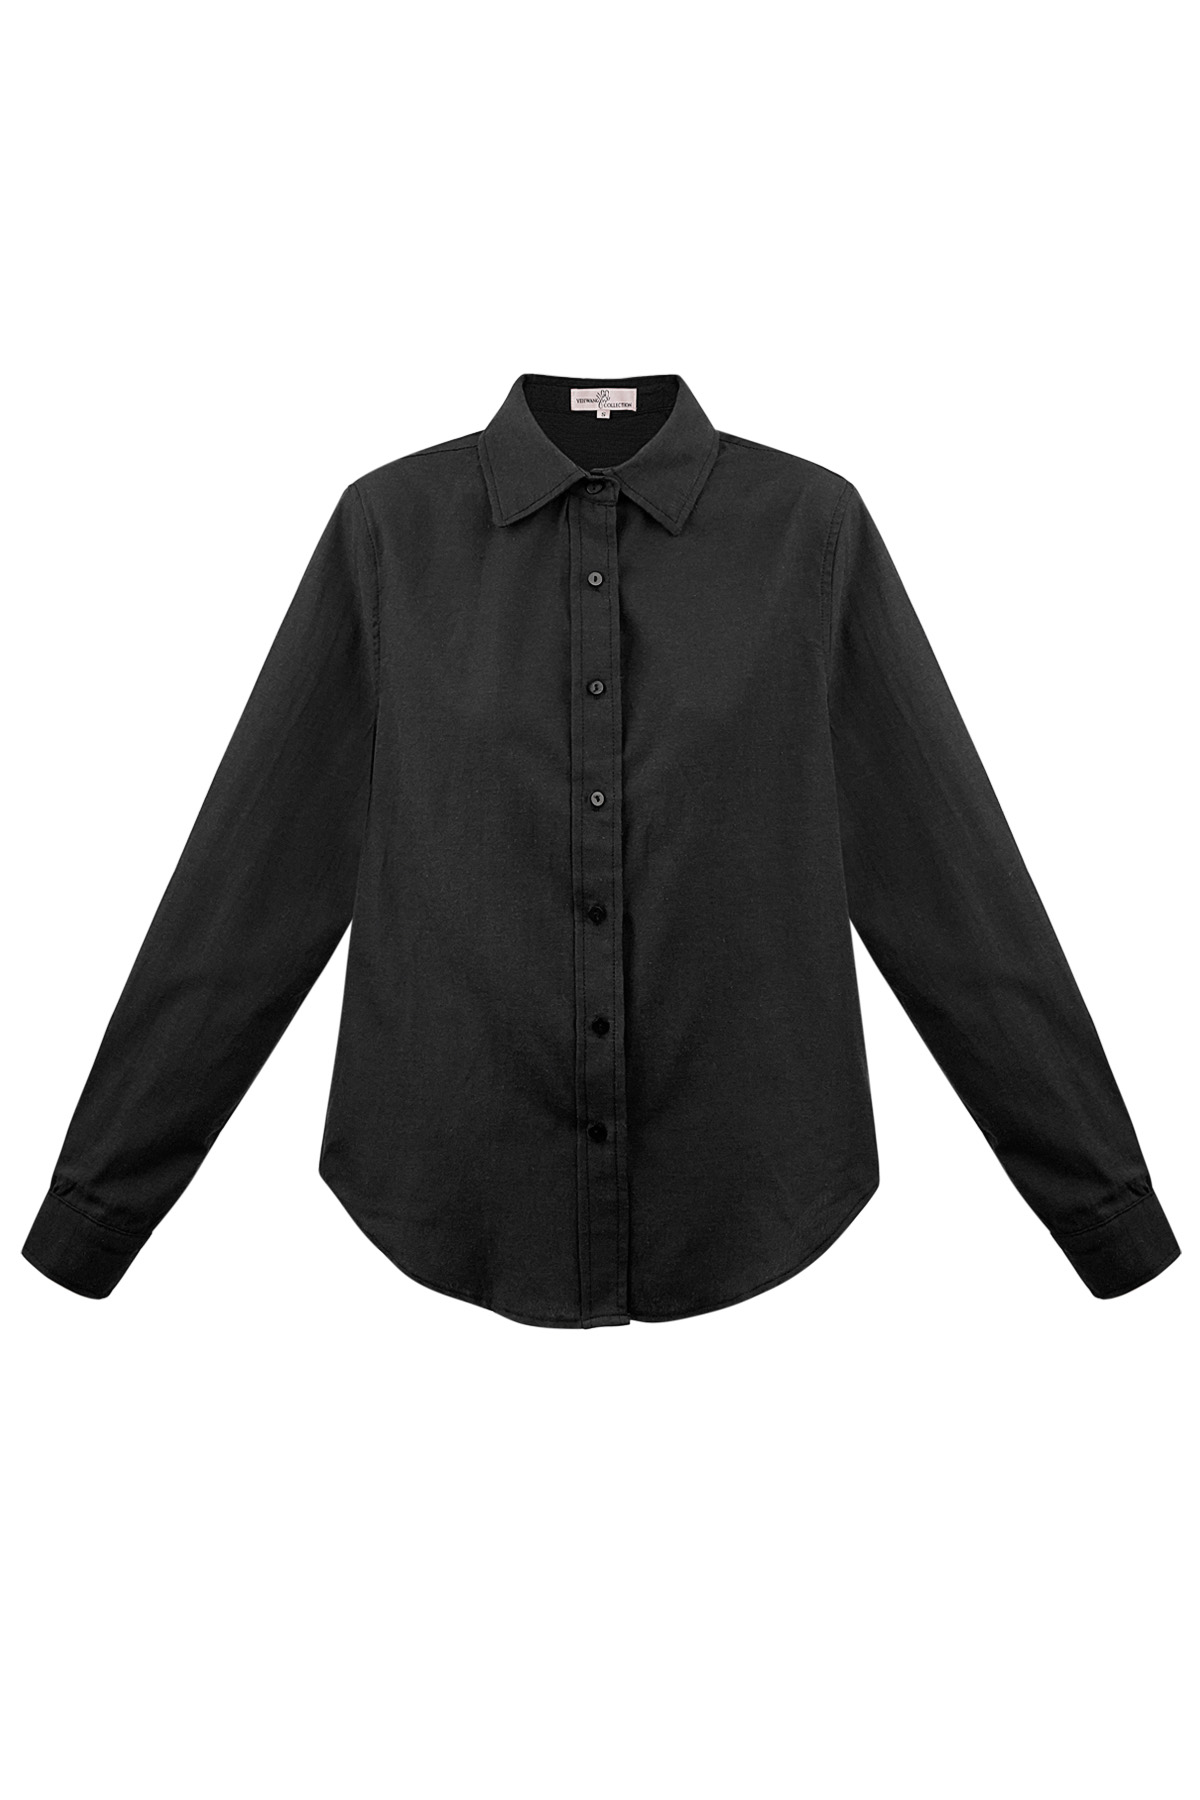 Basic plain blouse - black